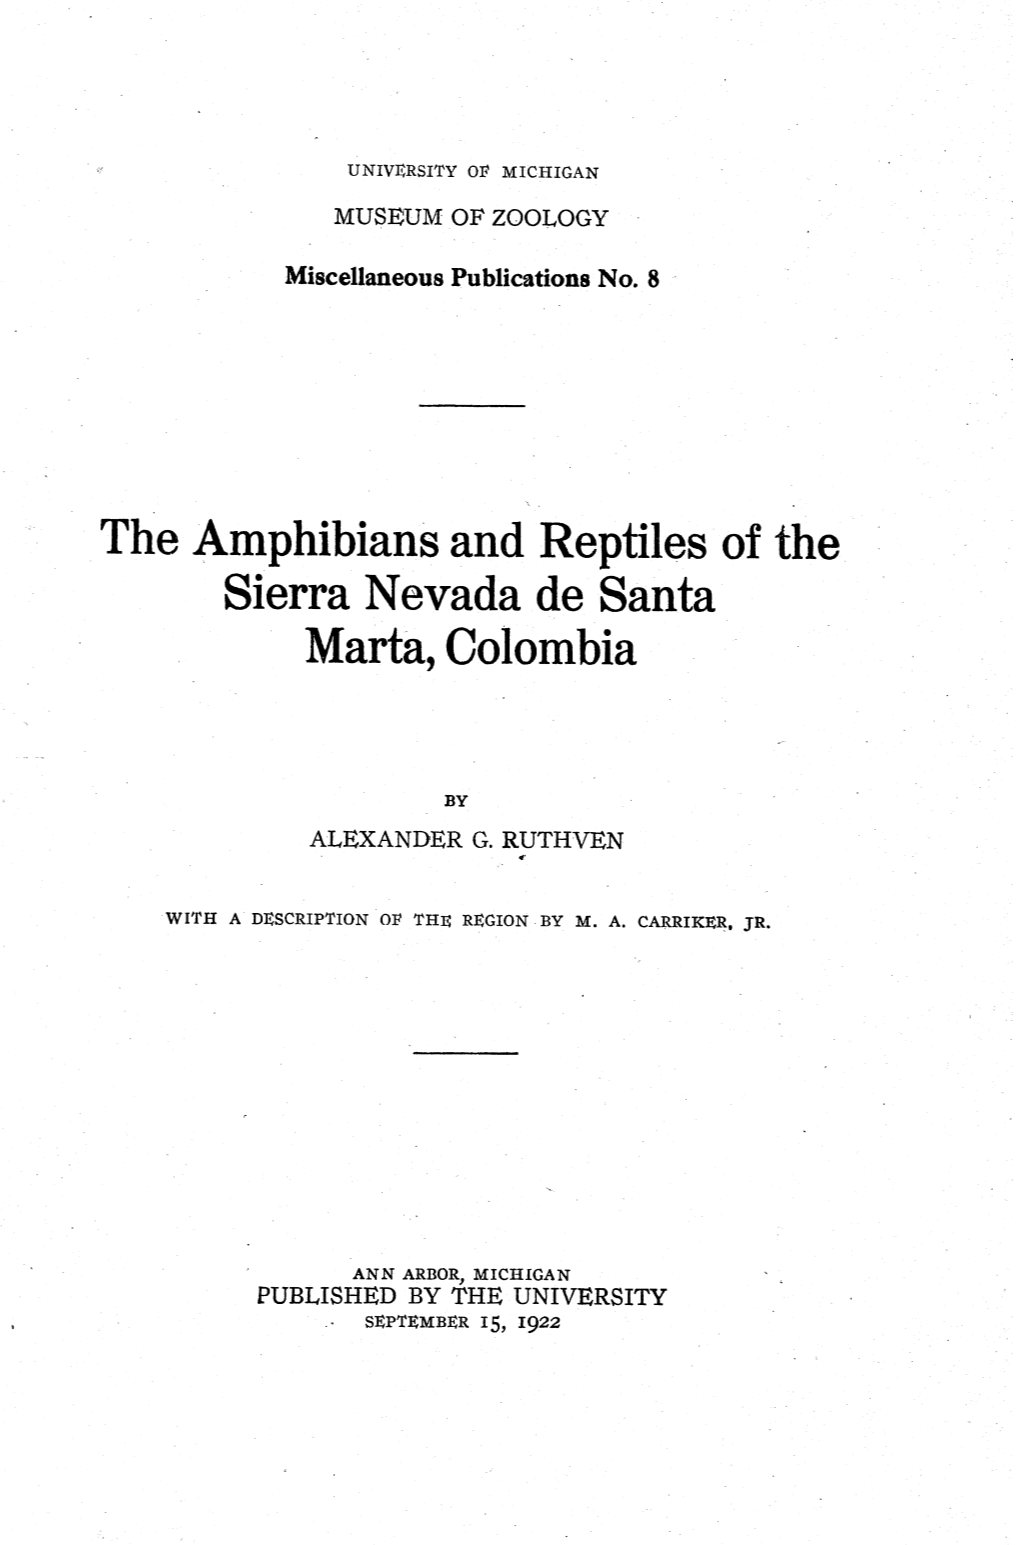 The Amphibians and Reptiles of the Sierra Nevada De Santa Marta, Colombia